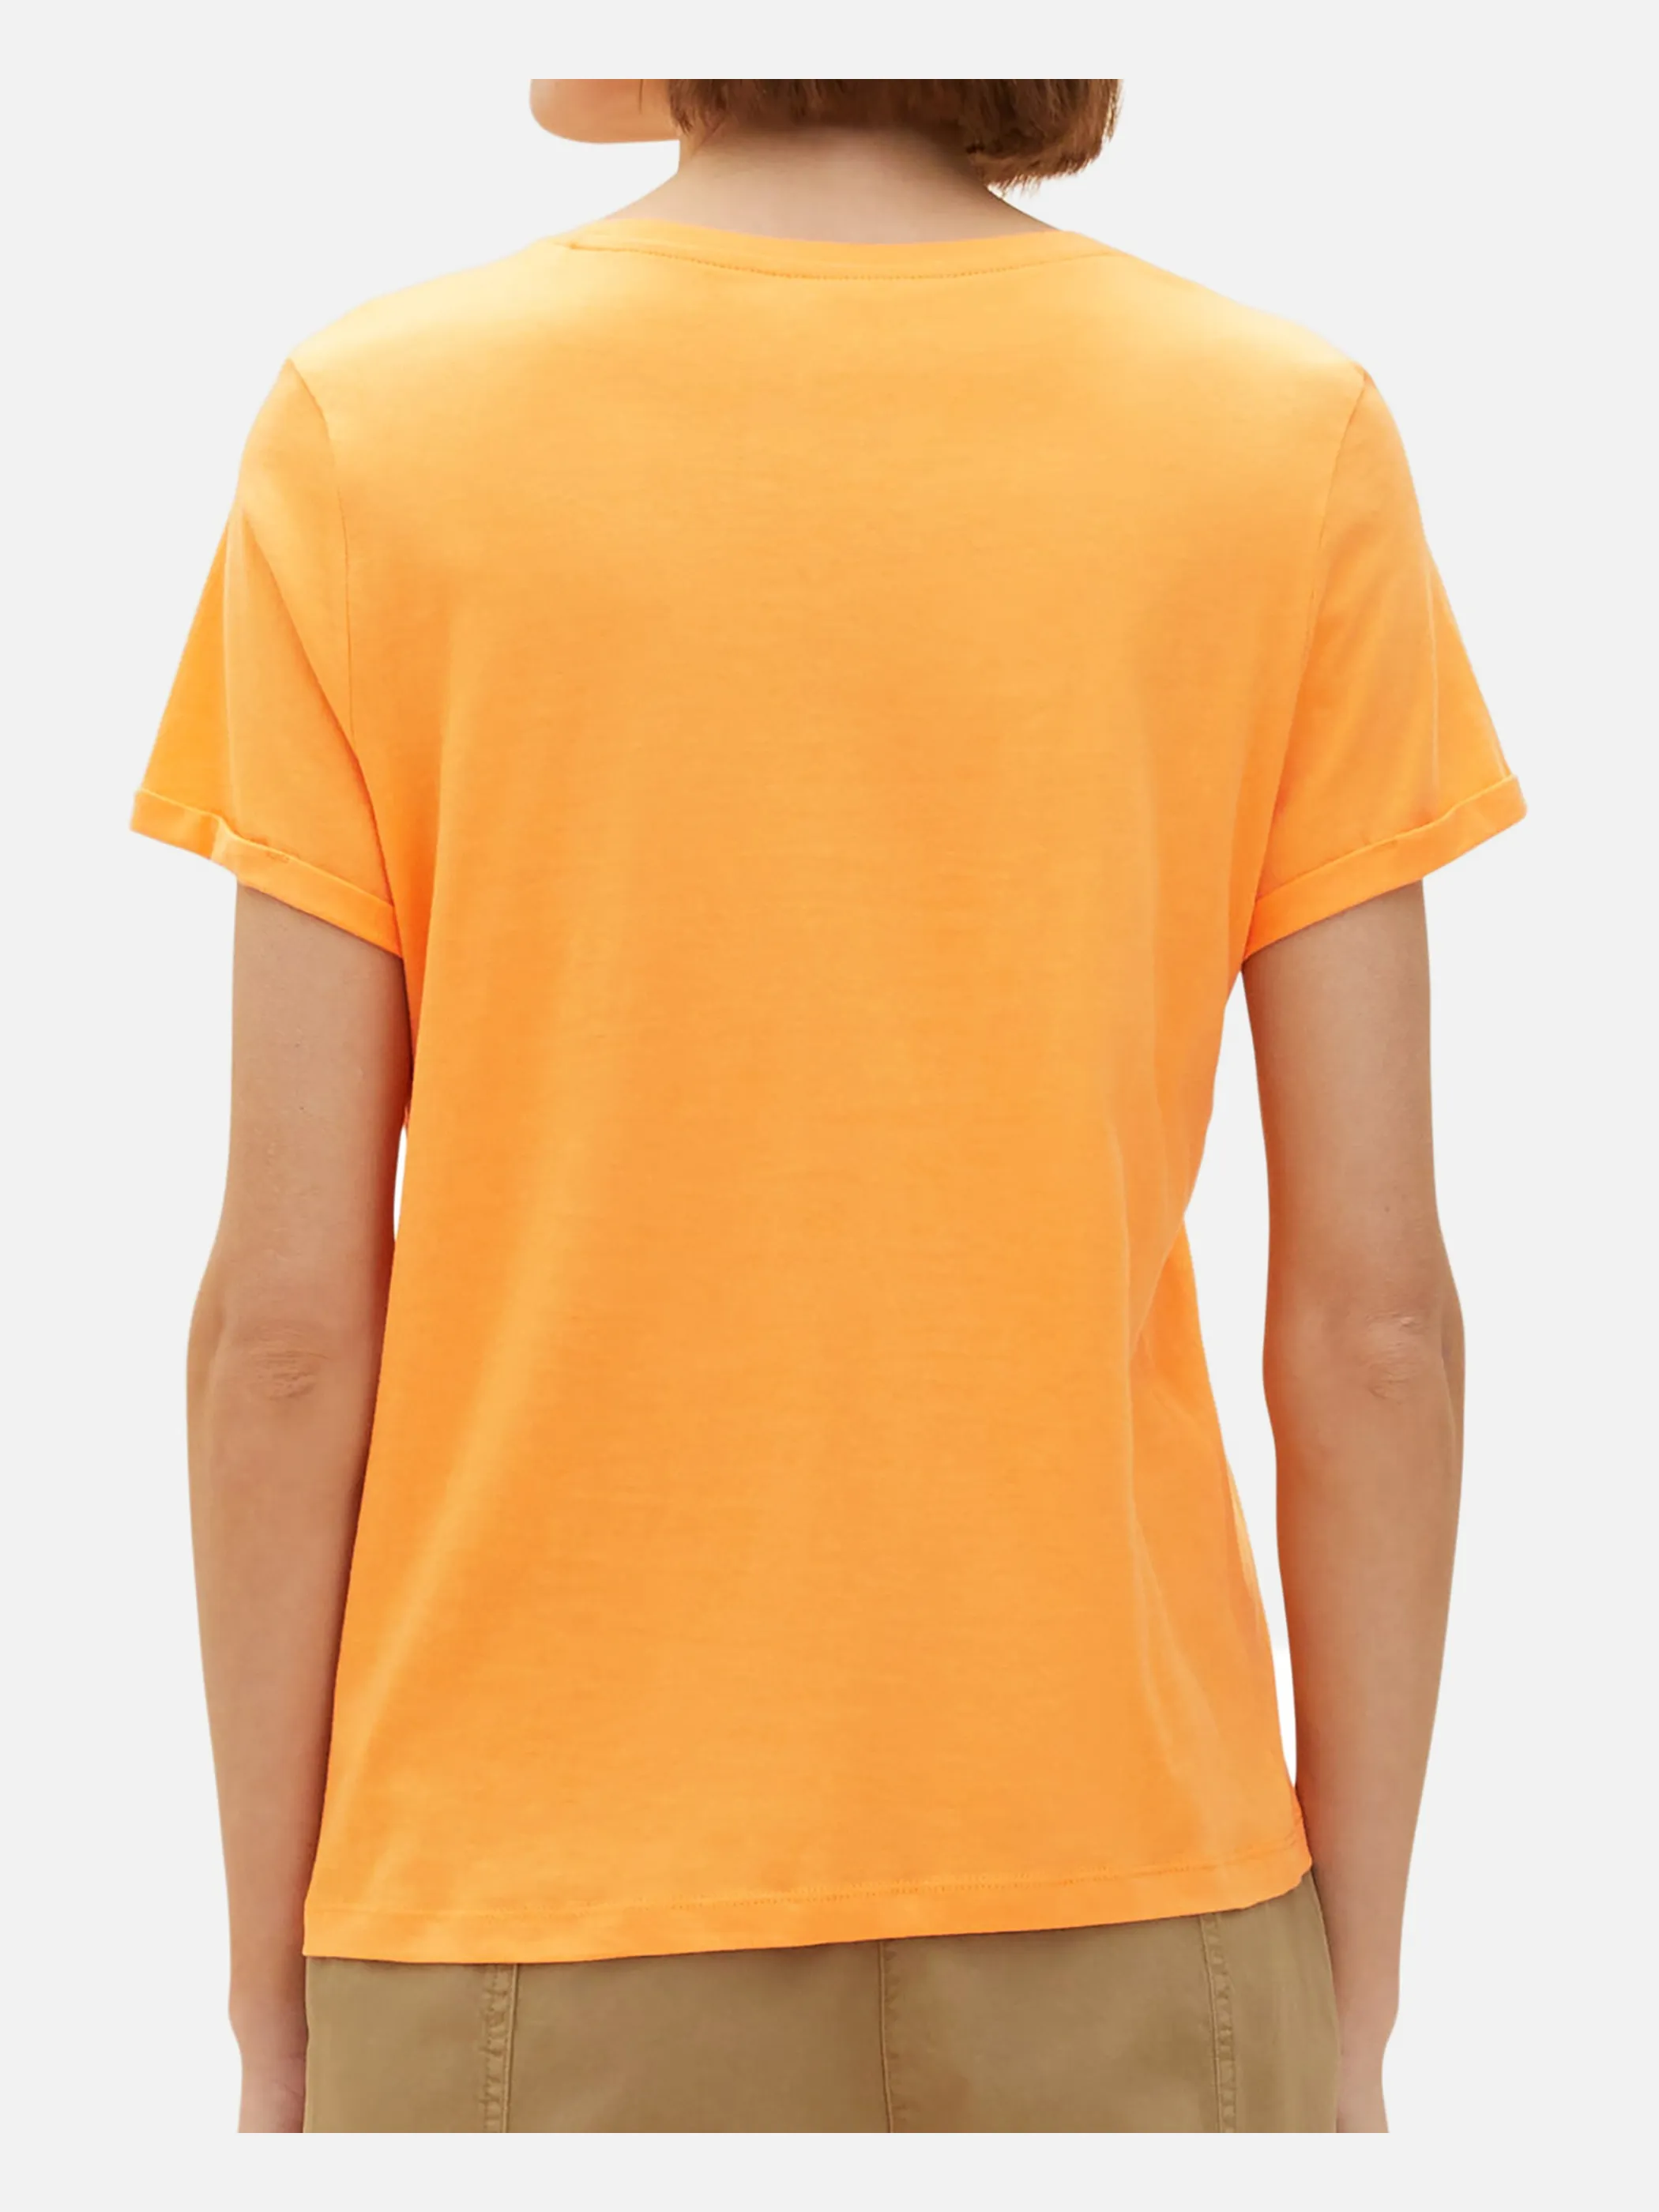 Tom Tailor 1035470 T-shirt frontprint Orange 874879 29751 2